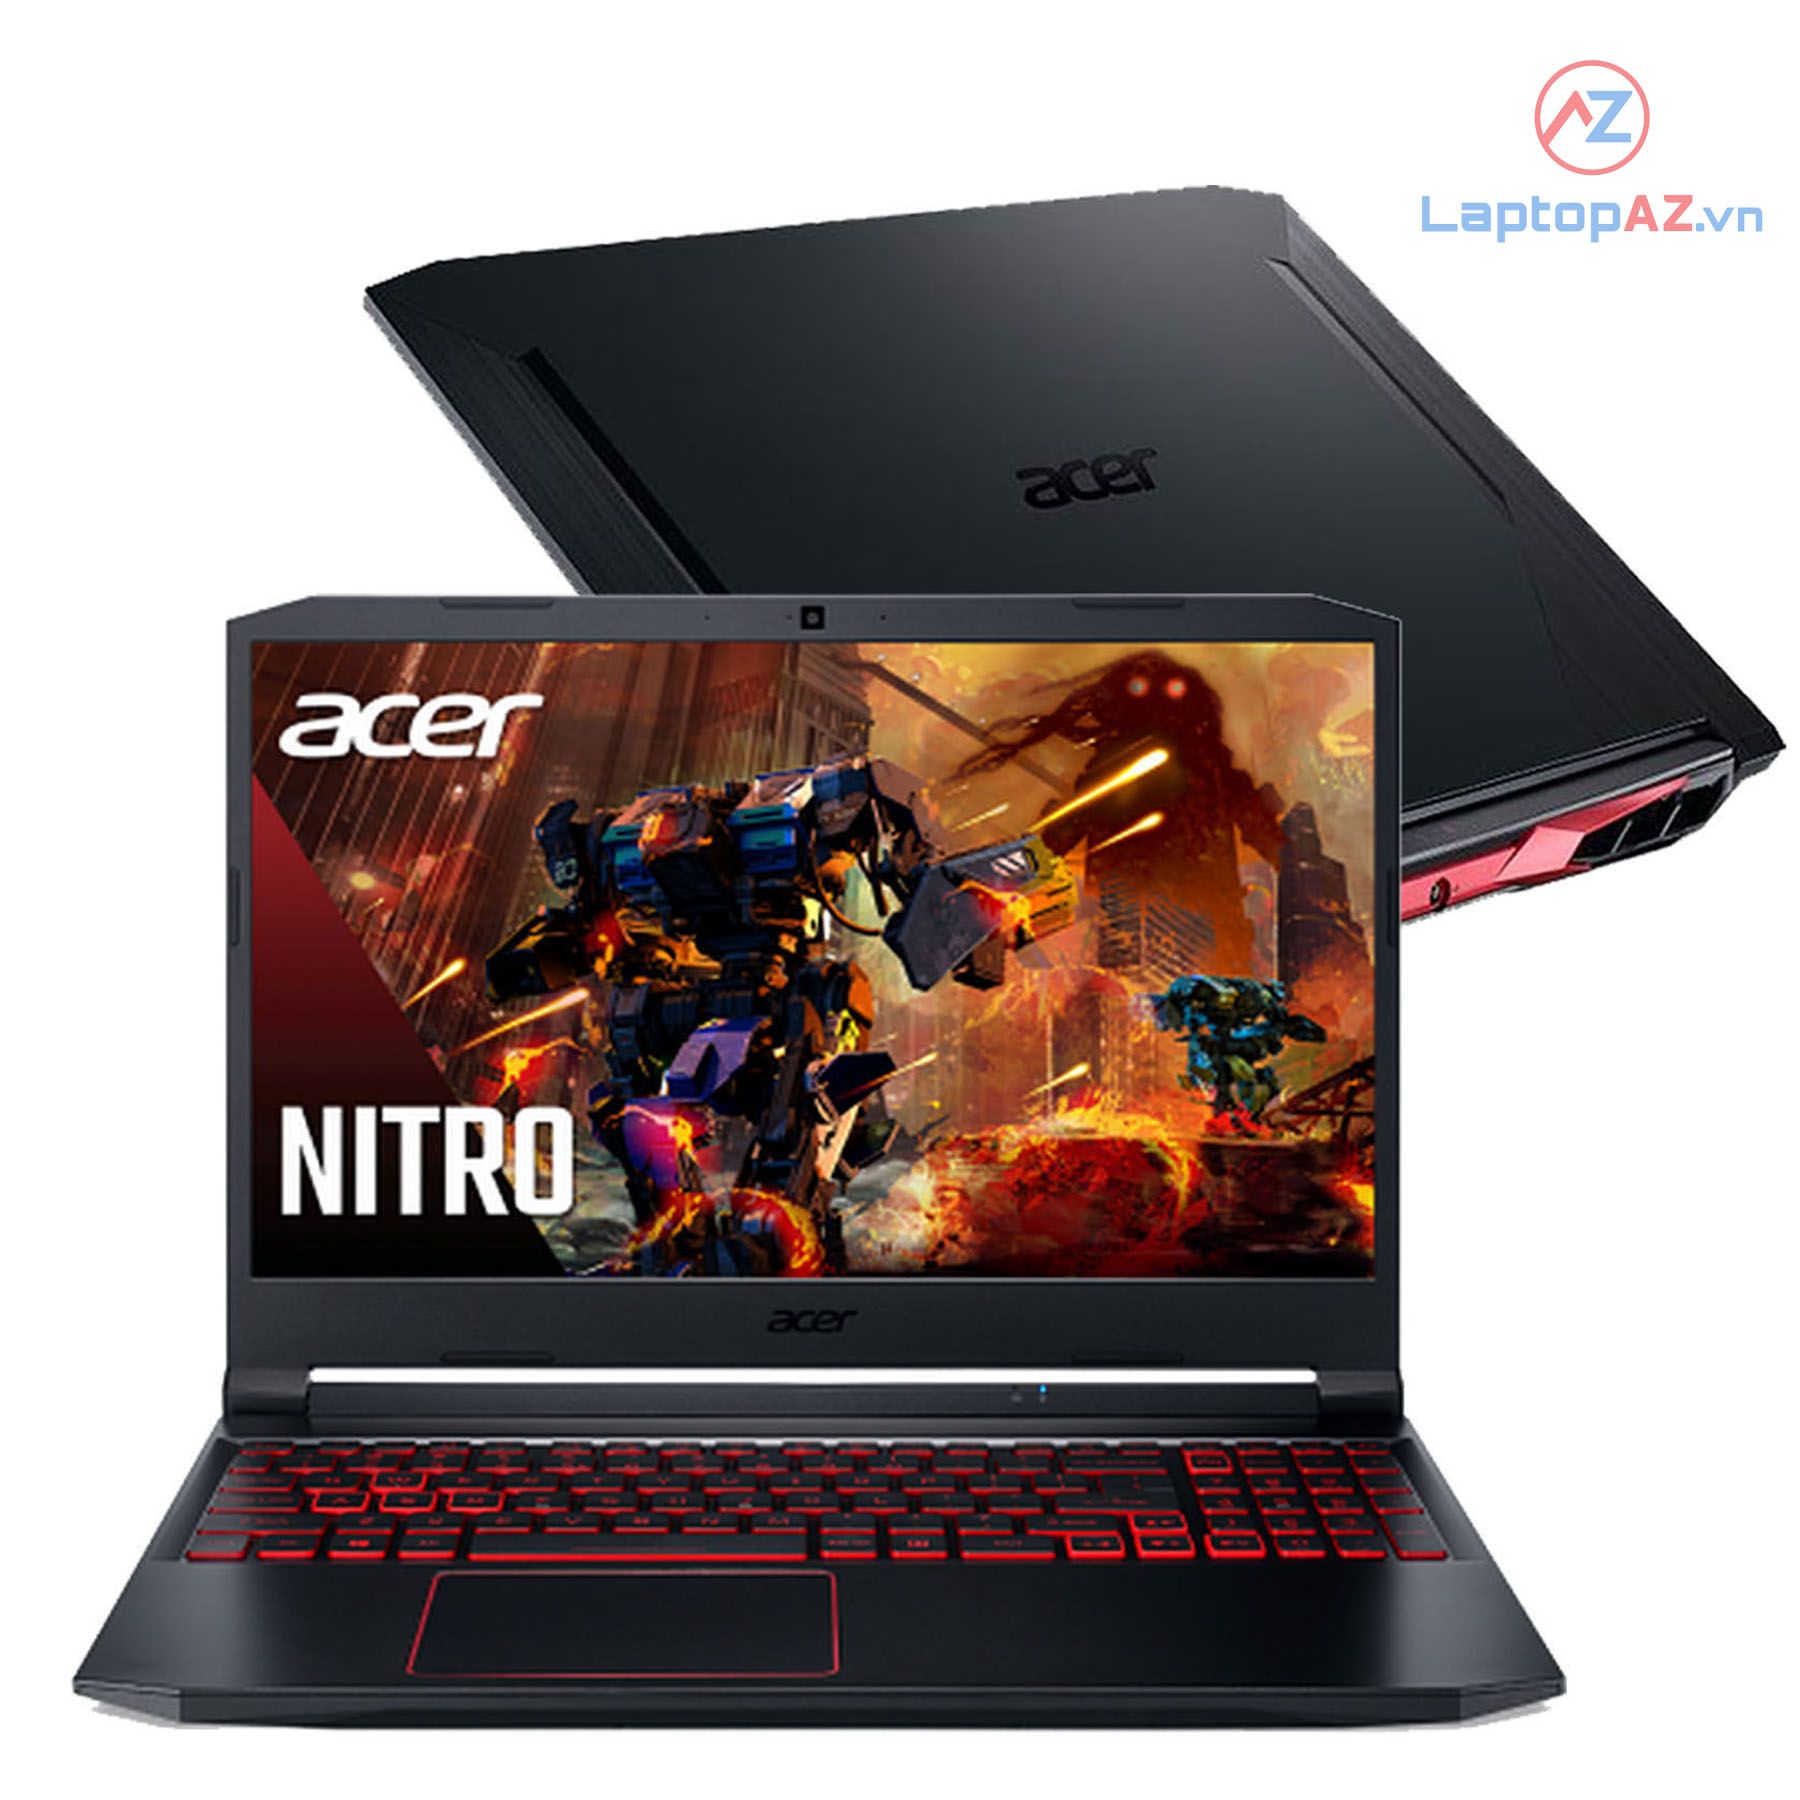 [Mới 100%] Laptop Acer Nitro 5 AN515-54-76RK (Core i7-9750H, 8GB, 512GB, VGA 4GB GTX 1650, 15.6 inch, FHD IPS)